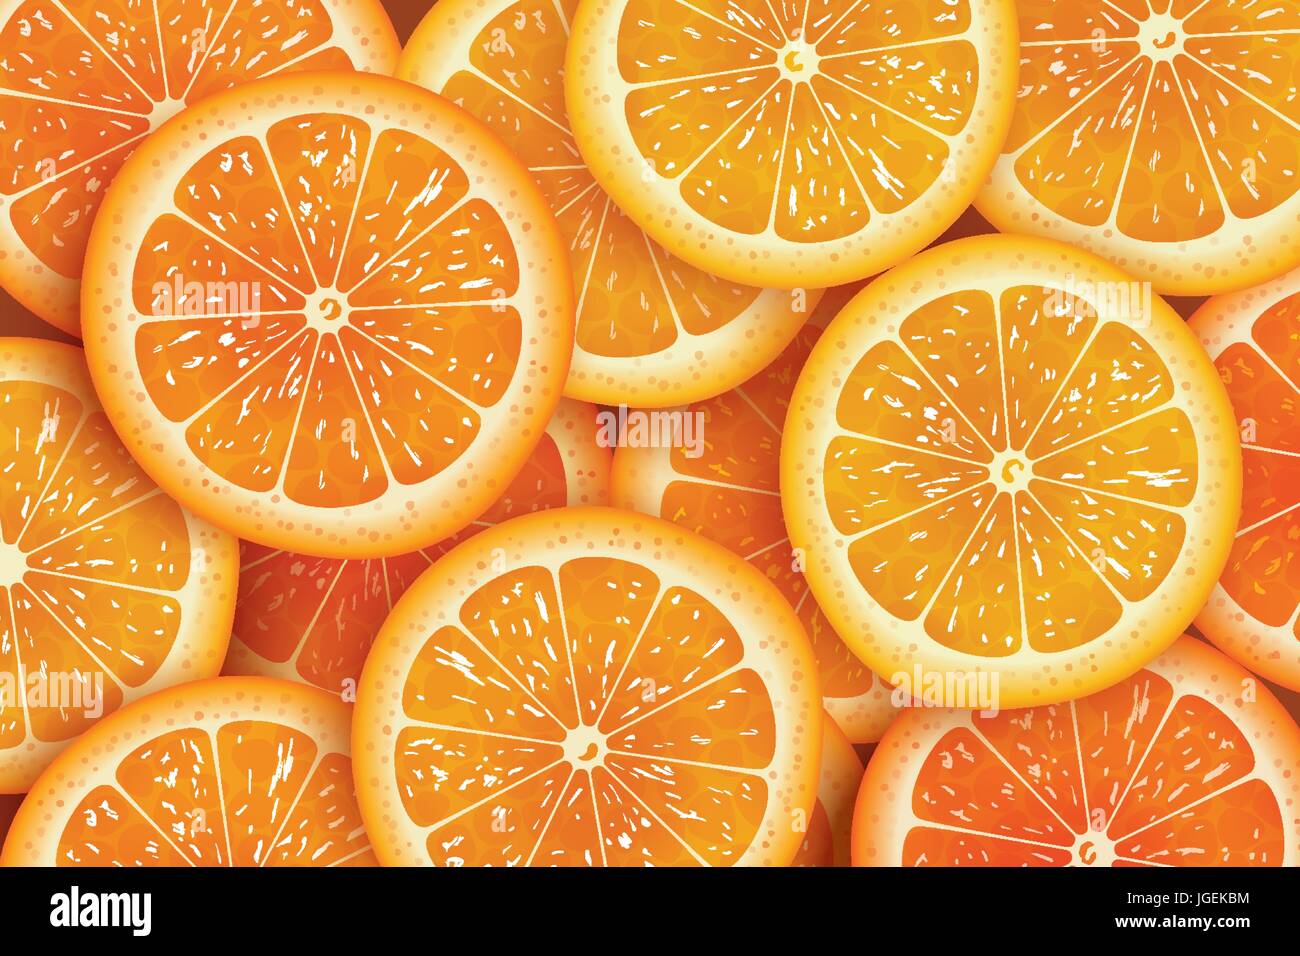 Orange slice background for summer. Stock Vector